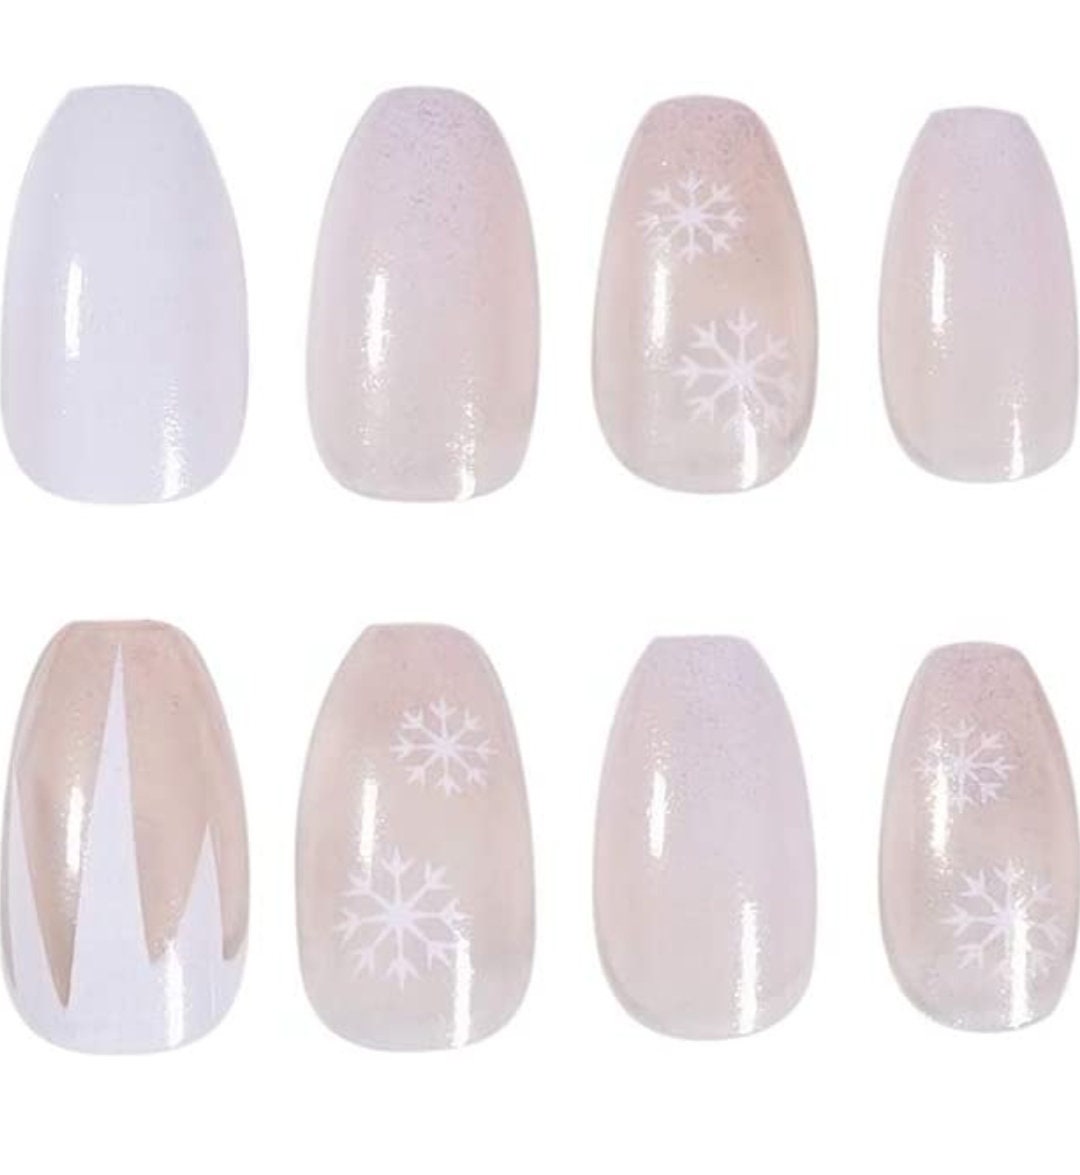 24 Winter Press on nails kit glue on snow flake white nude festive Xmas medium coffin clear